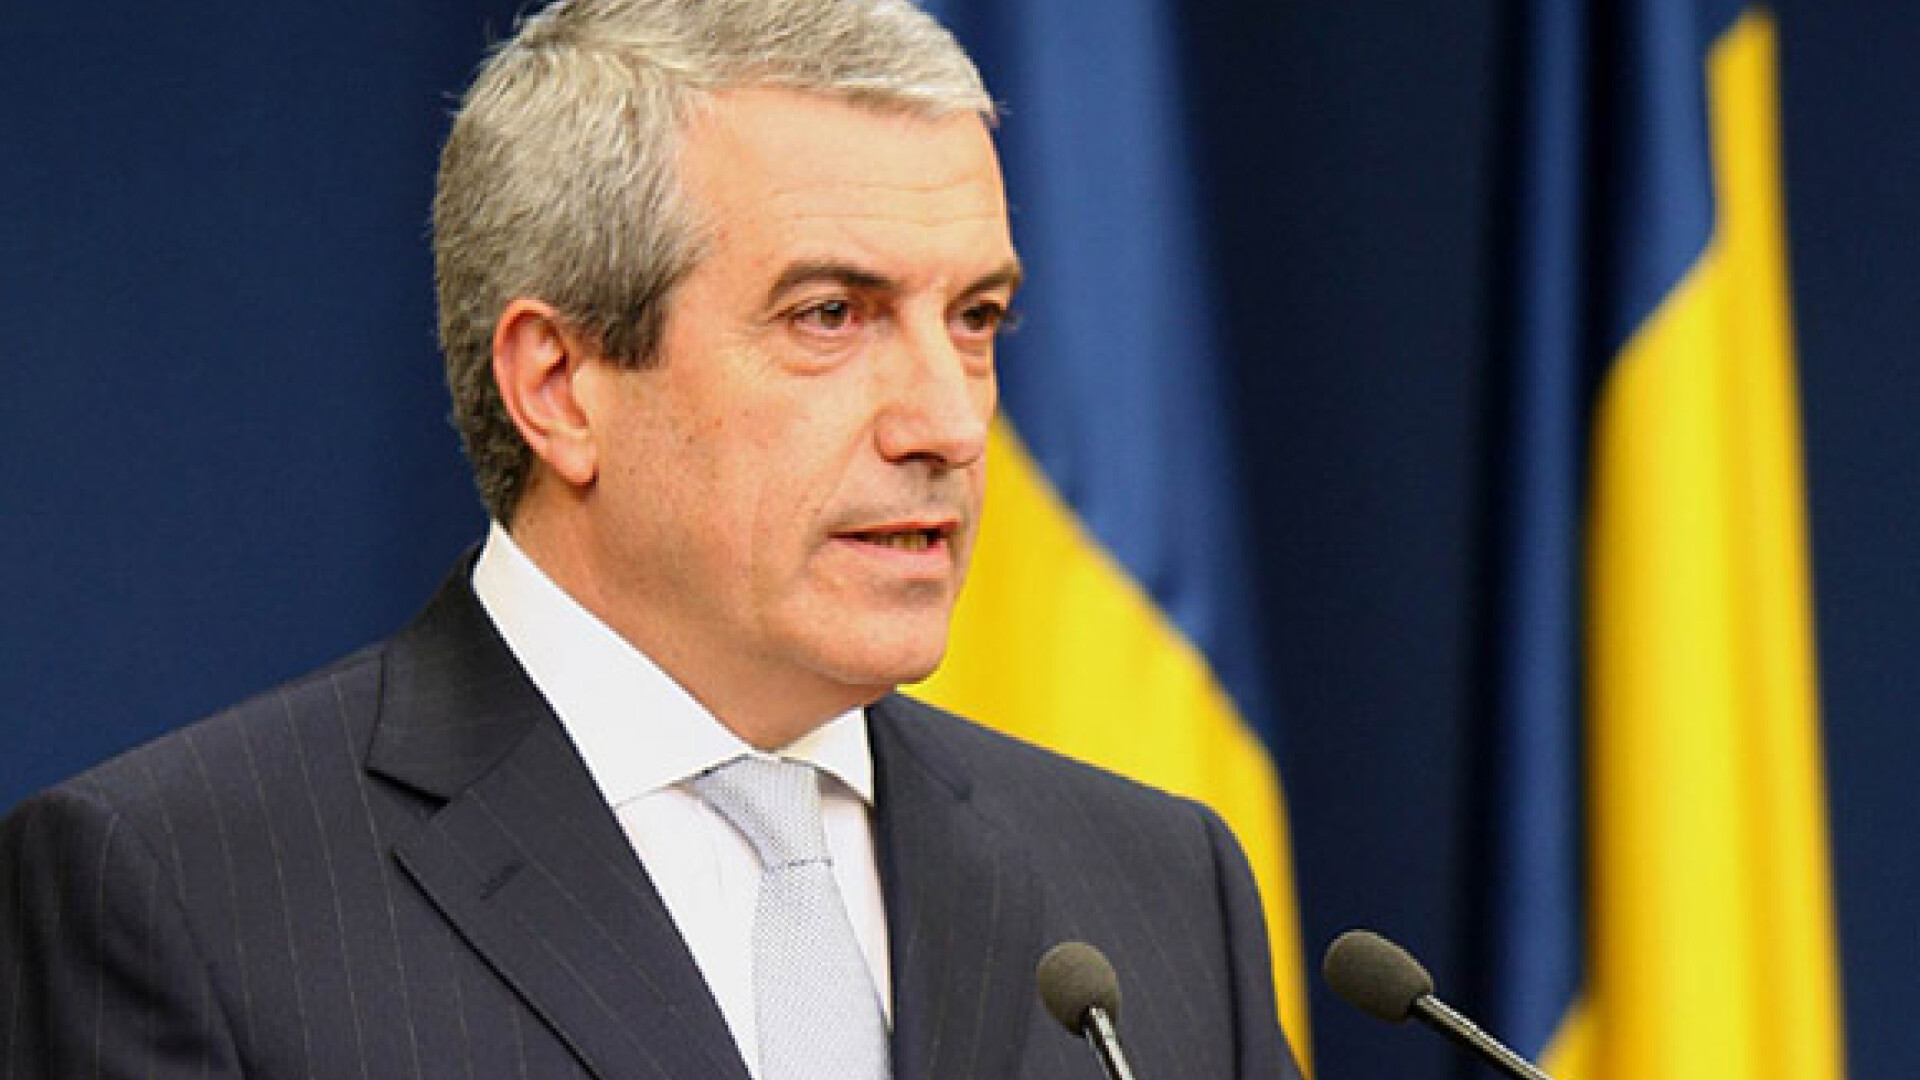 Tariceanu: intrevedere cu ministrii privind majorarile salariale